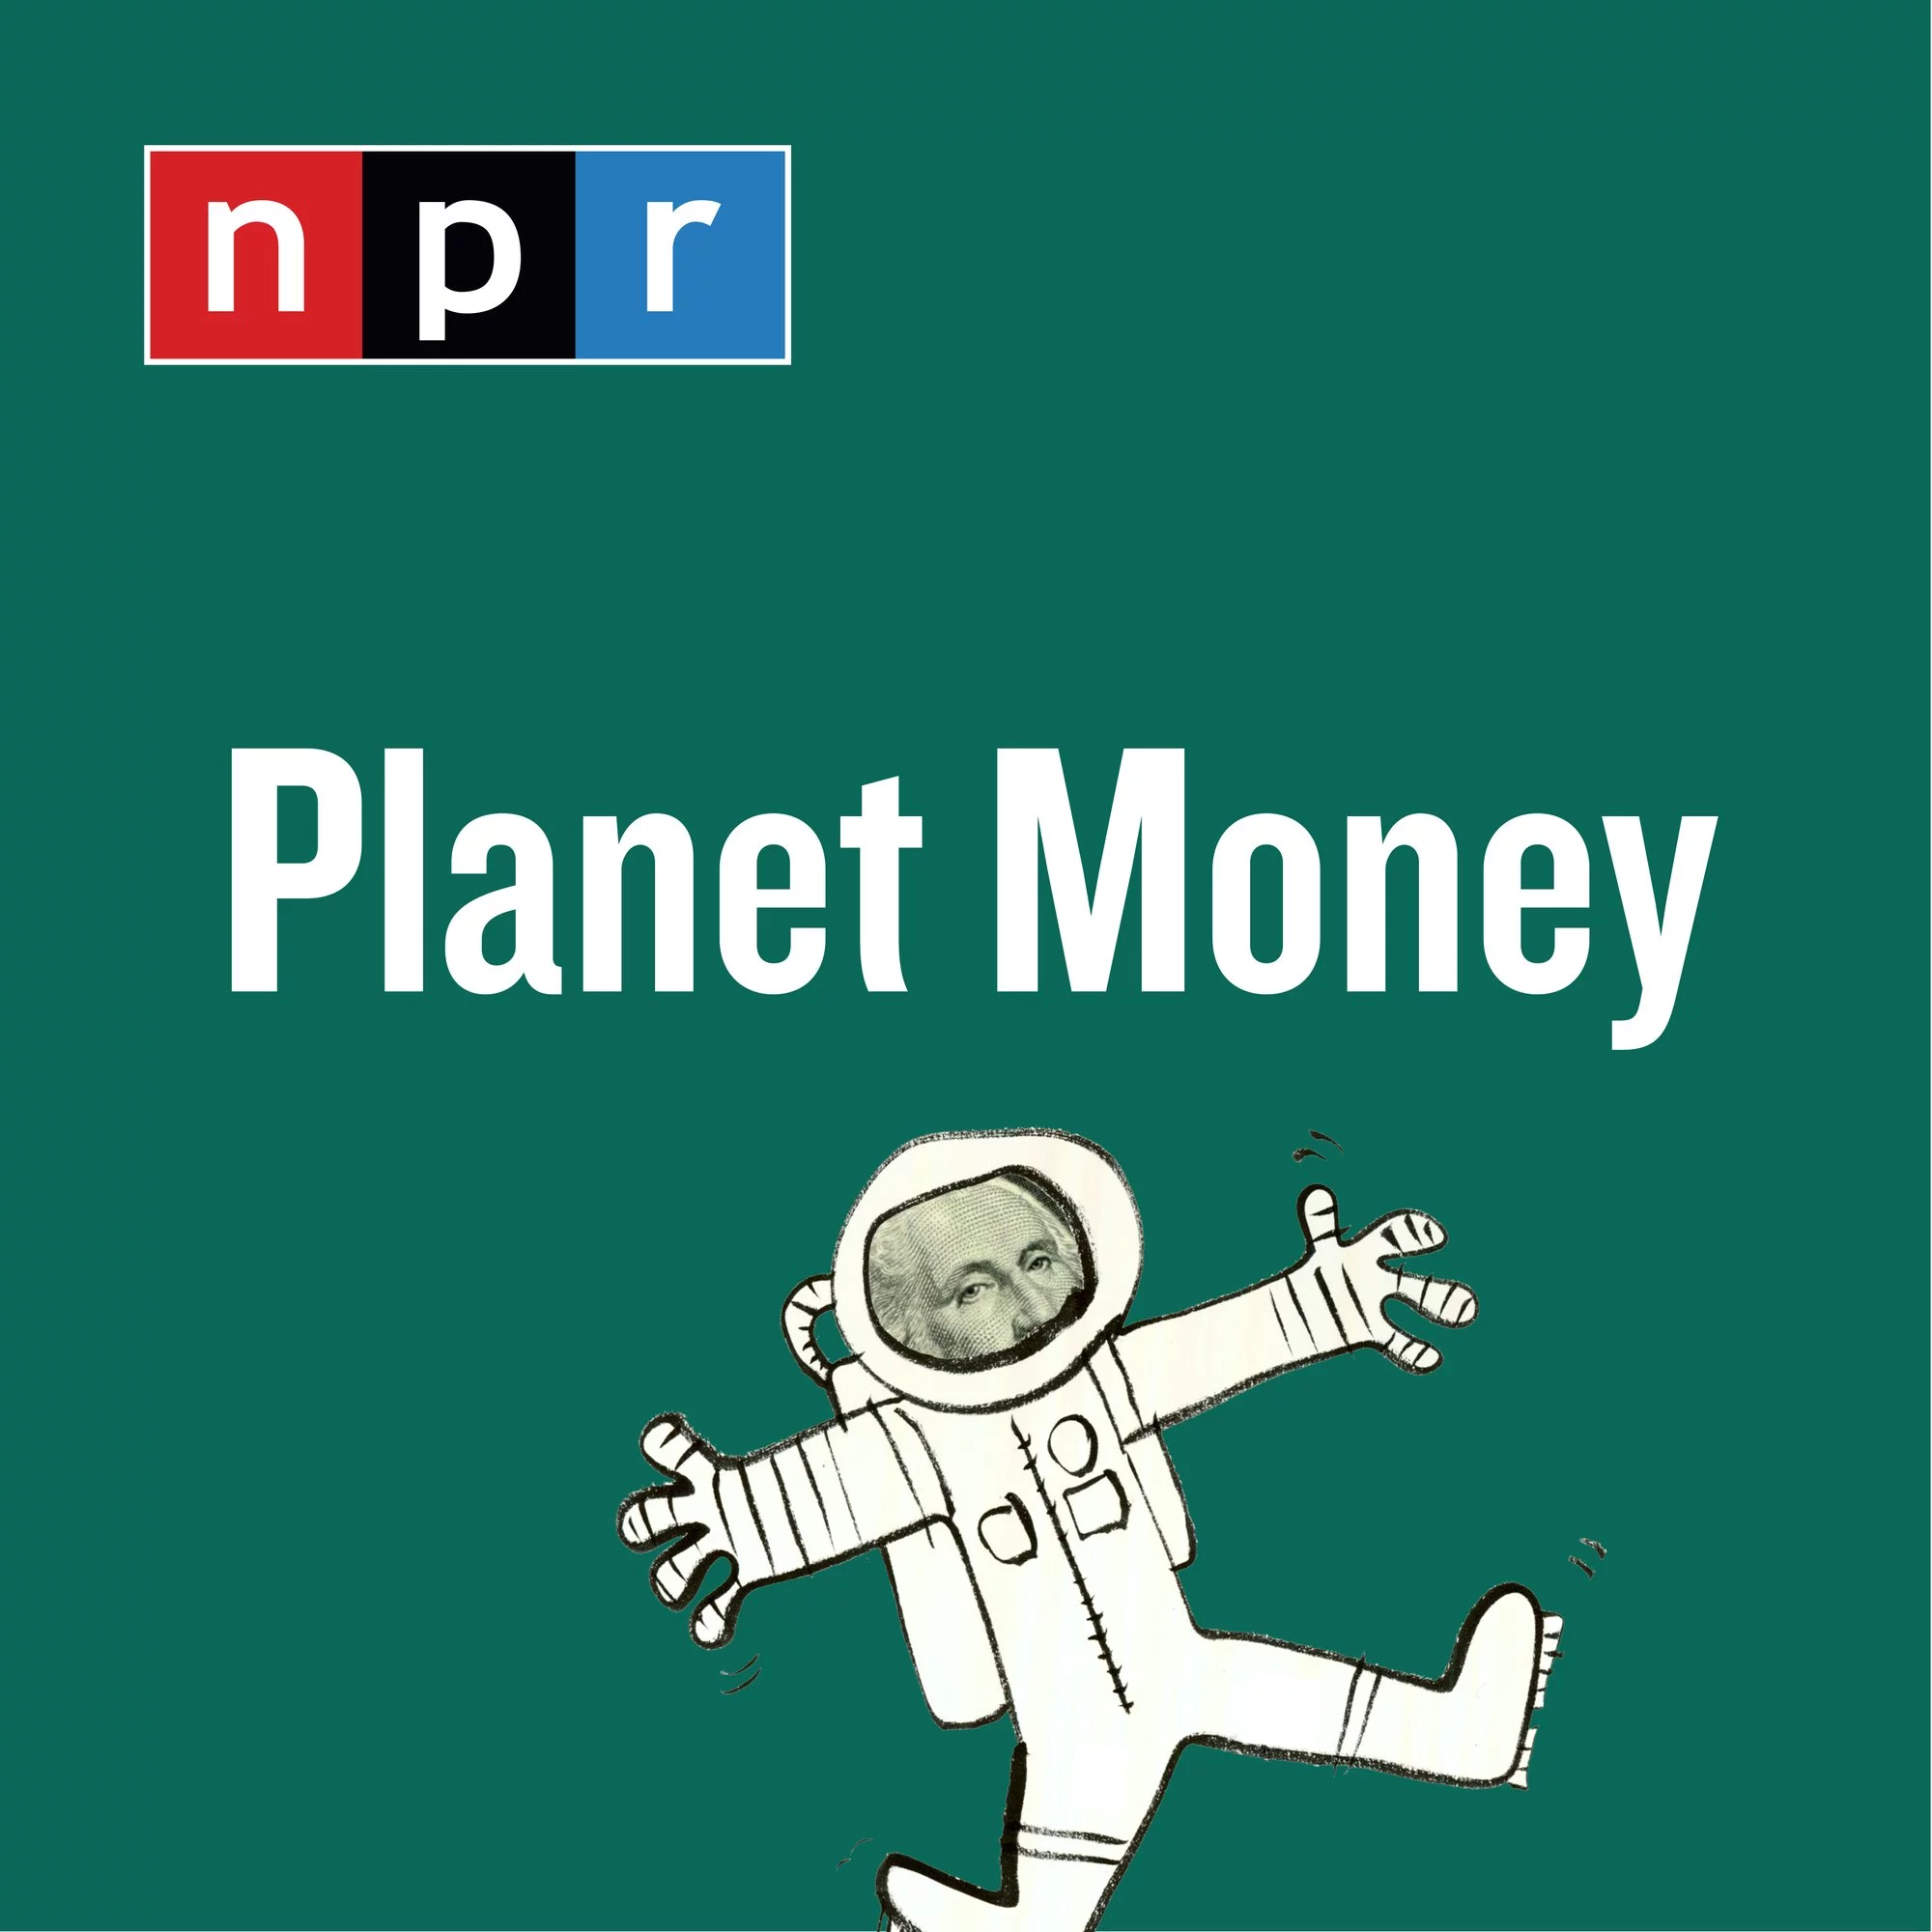 Episode 672: Bagging the Birkin : Planet Money : NPR